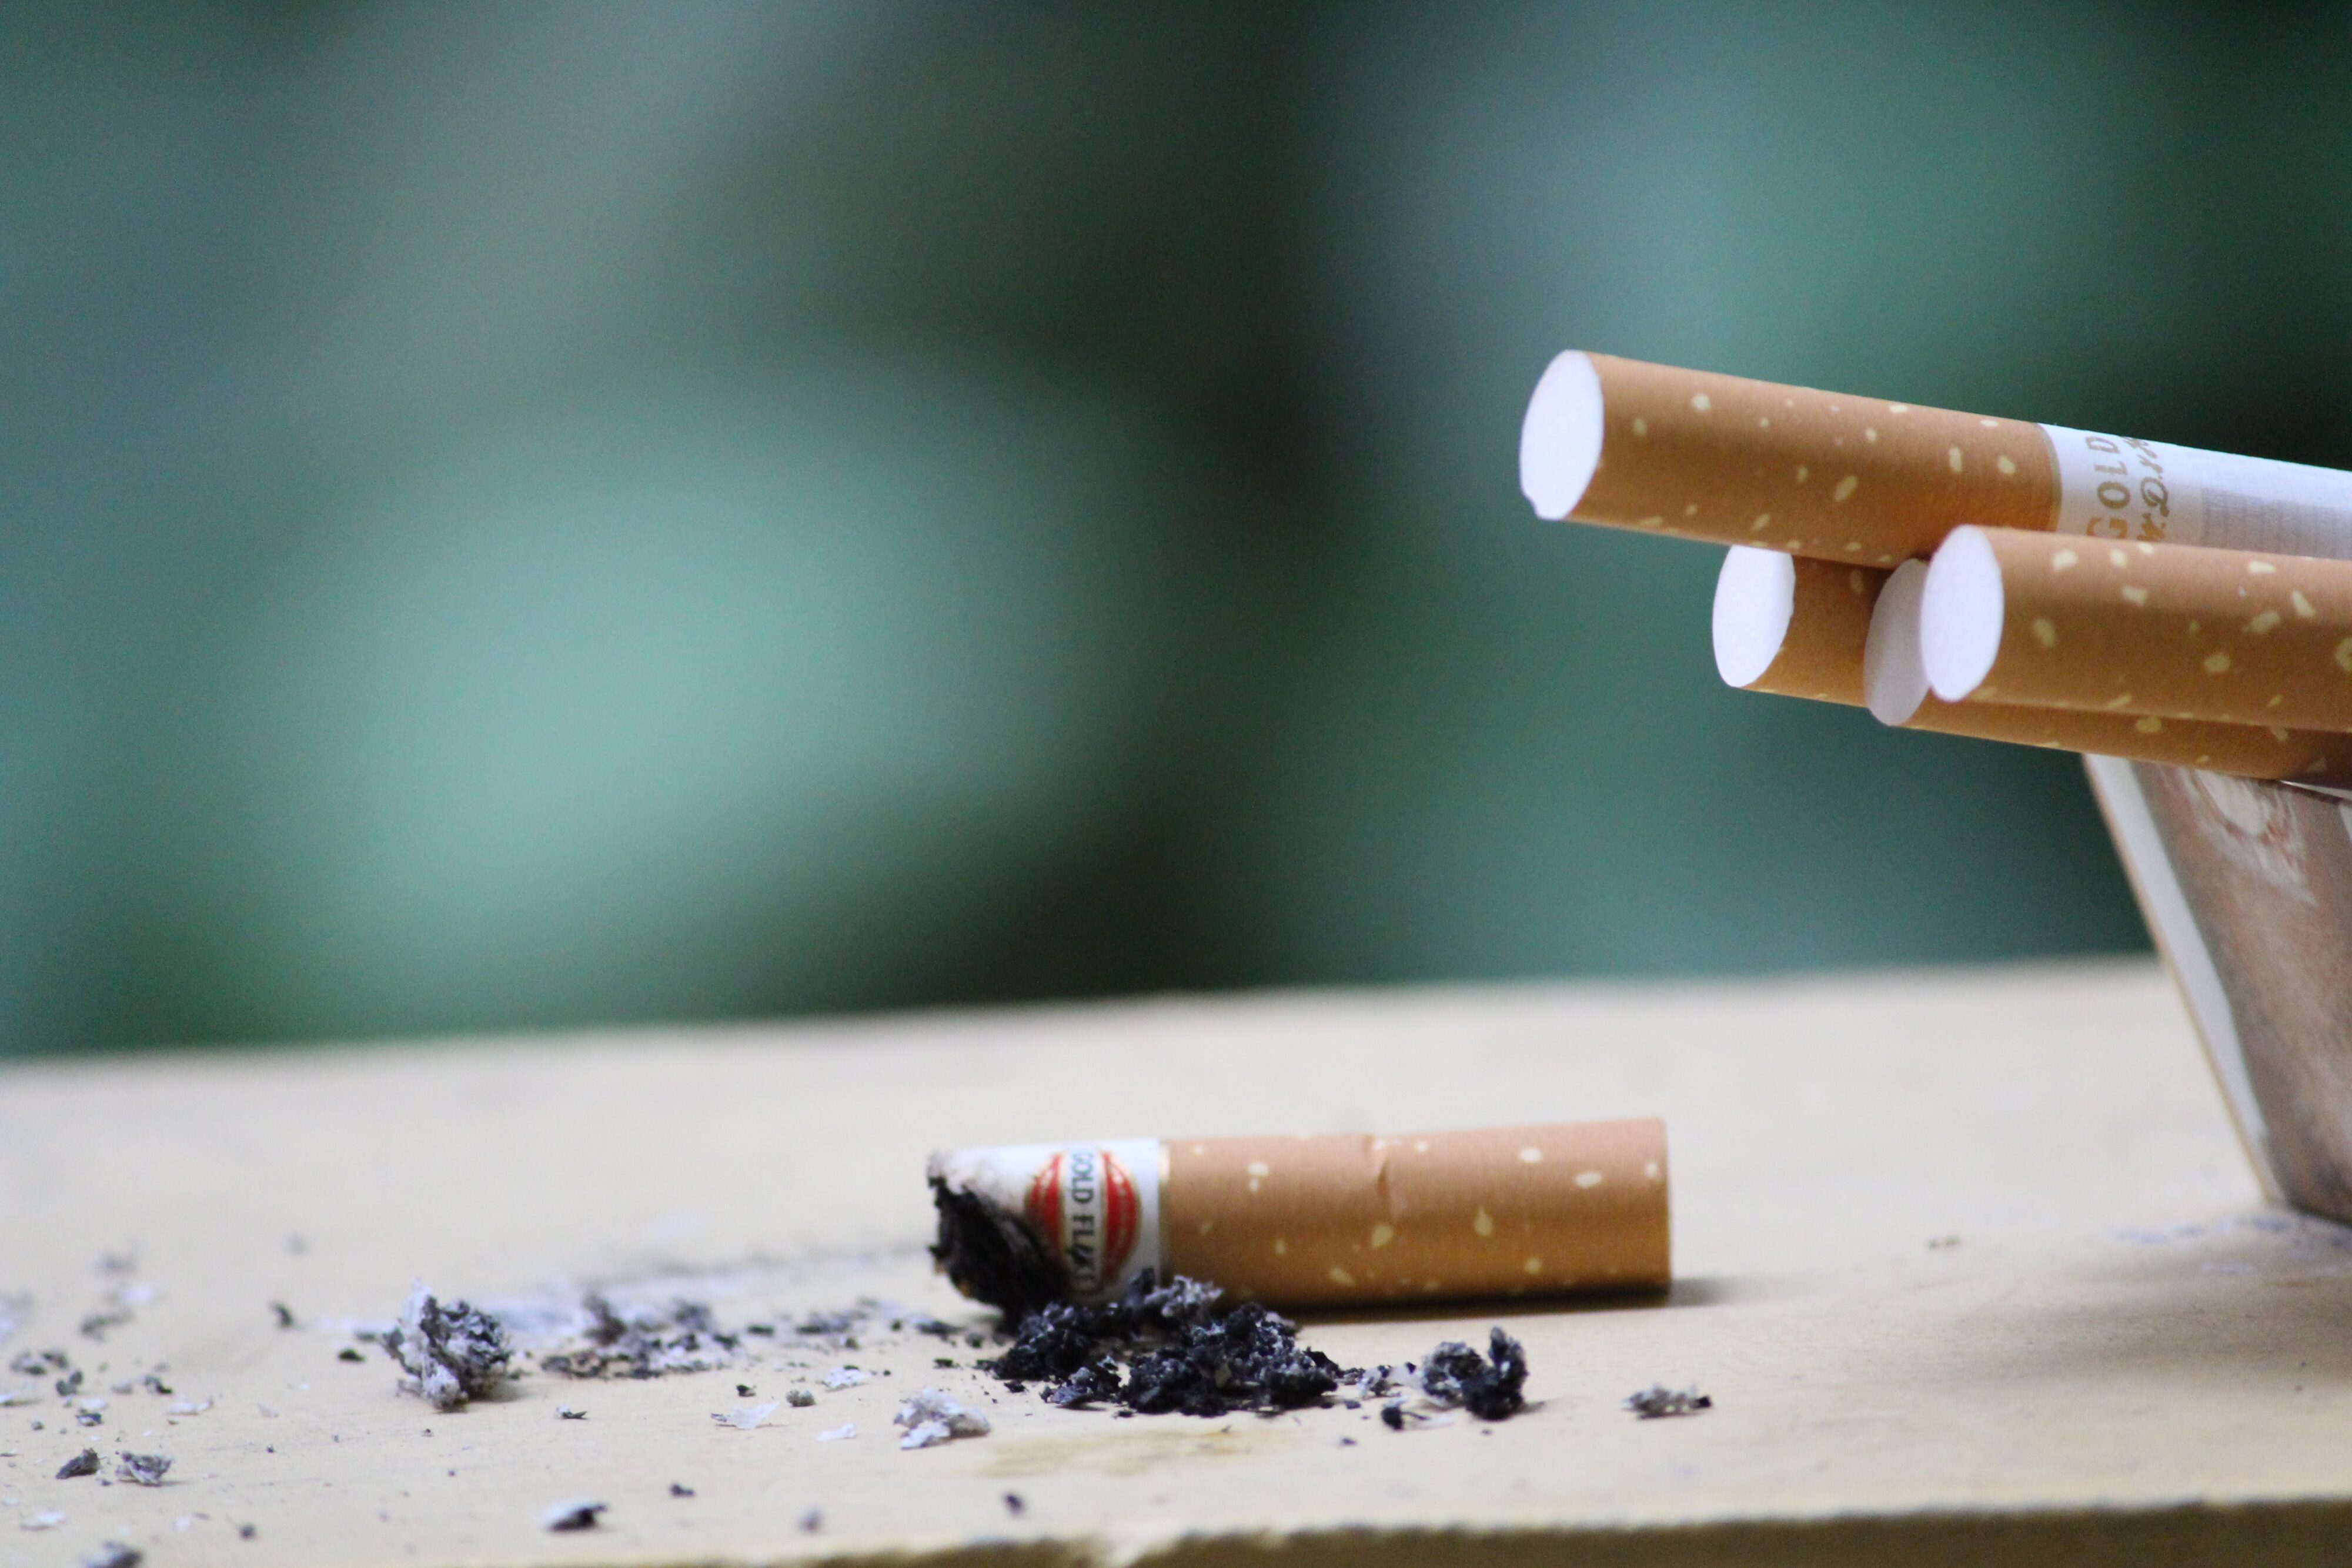 A smoked ciarette butt next to unsmoked cigarettes